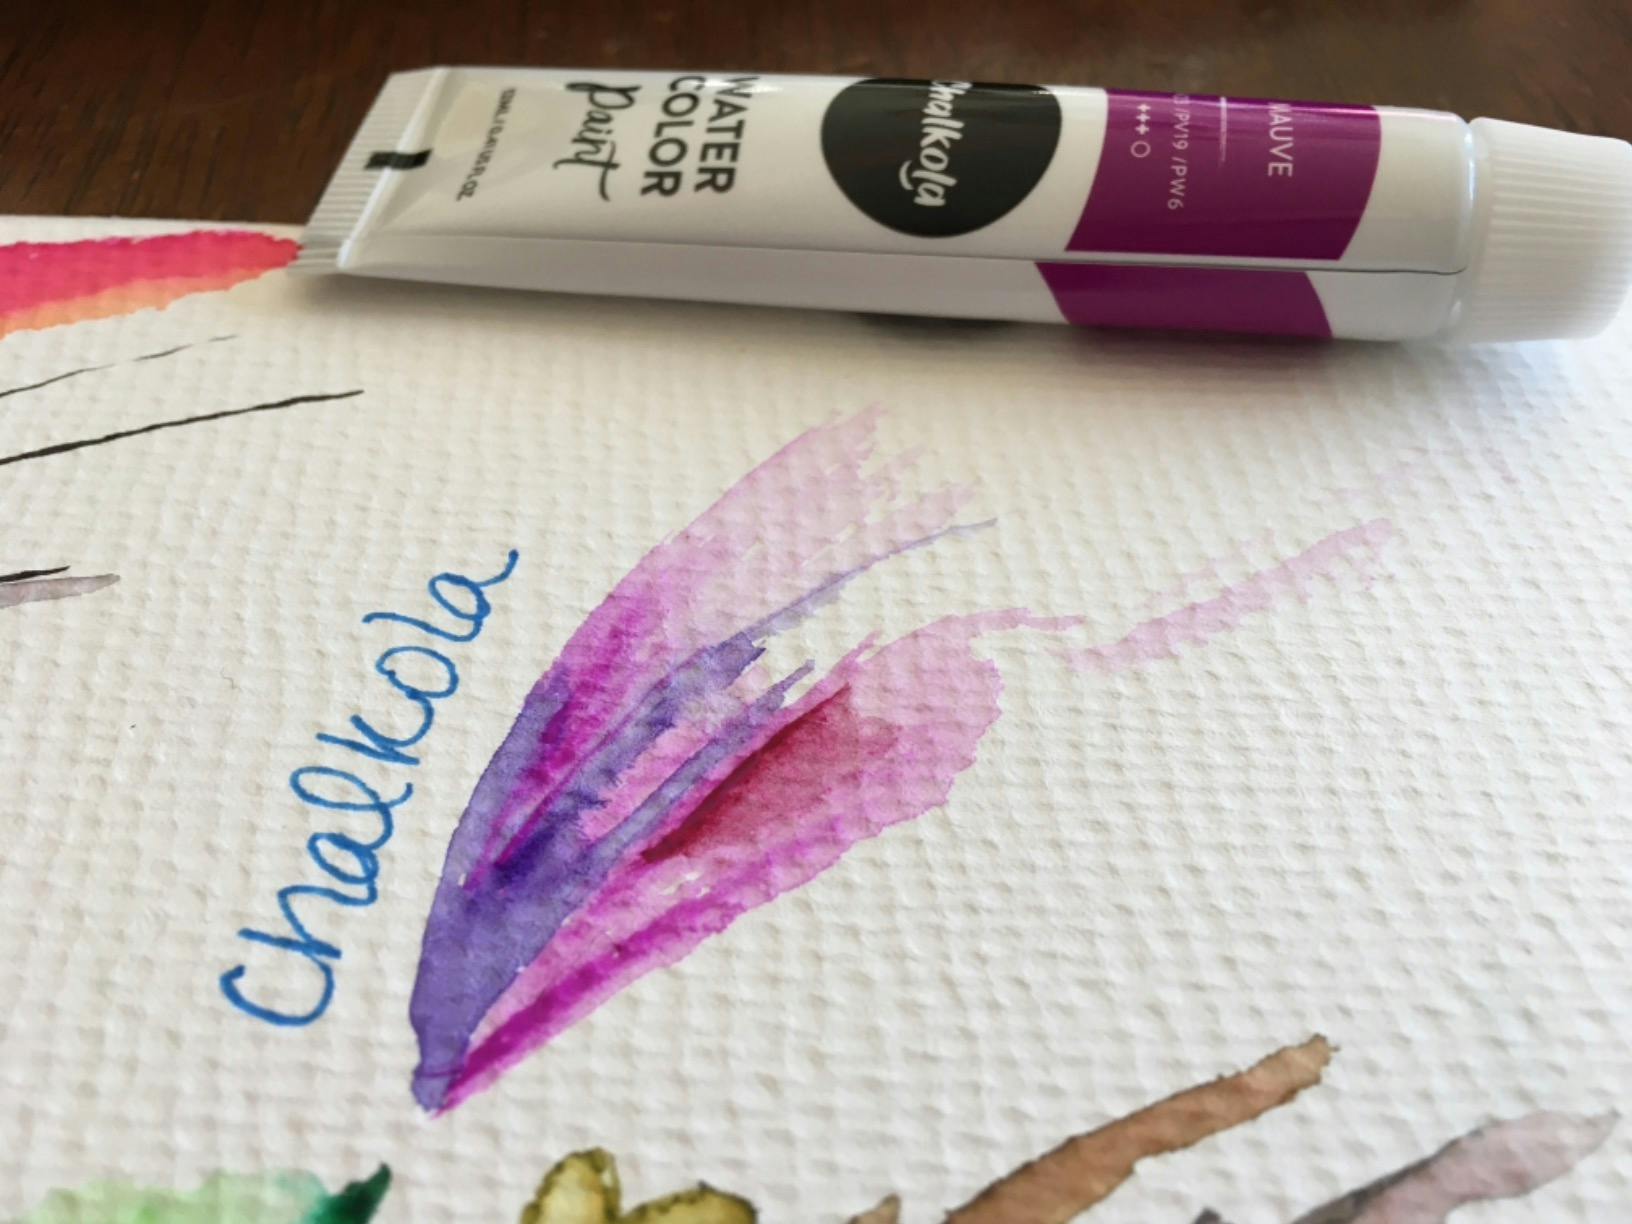 How to Draw a Portrait Using Watercolor Brush Pens - Chalkola - Chalkola  Art Supply